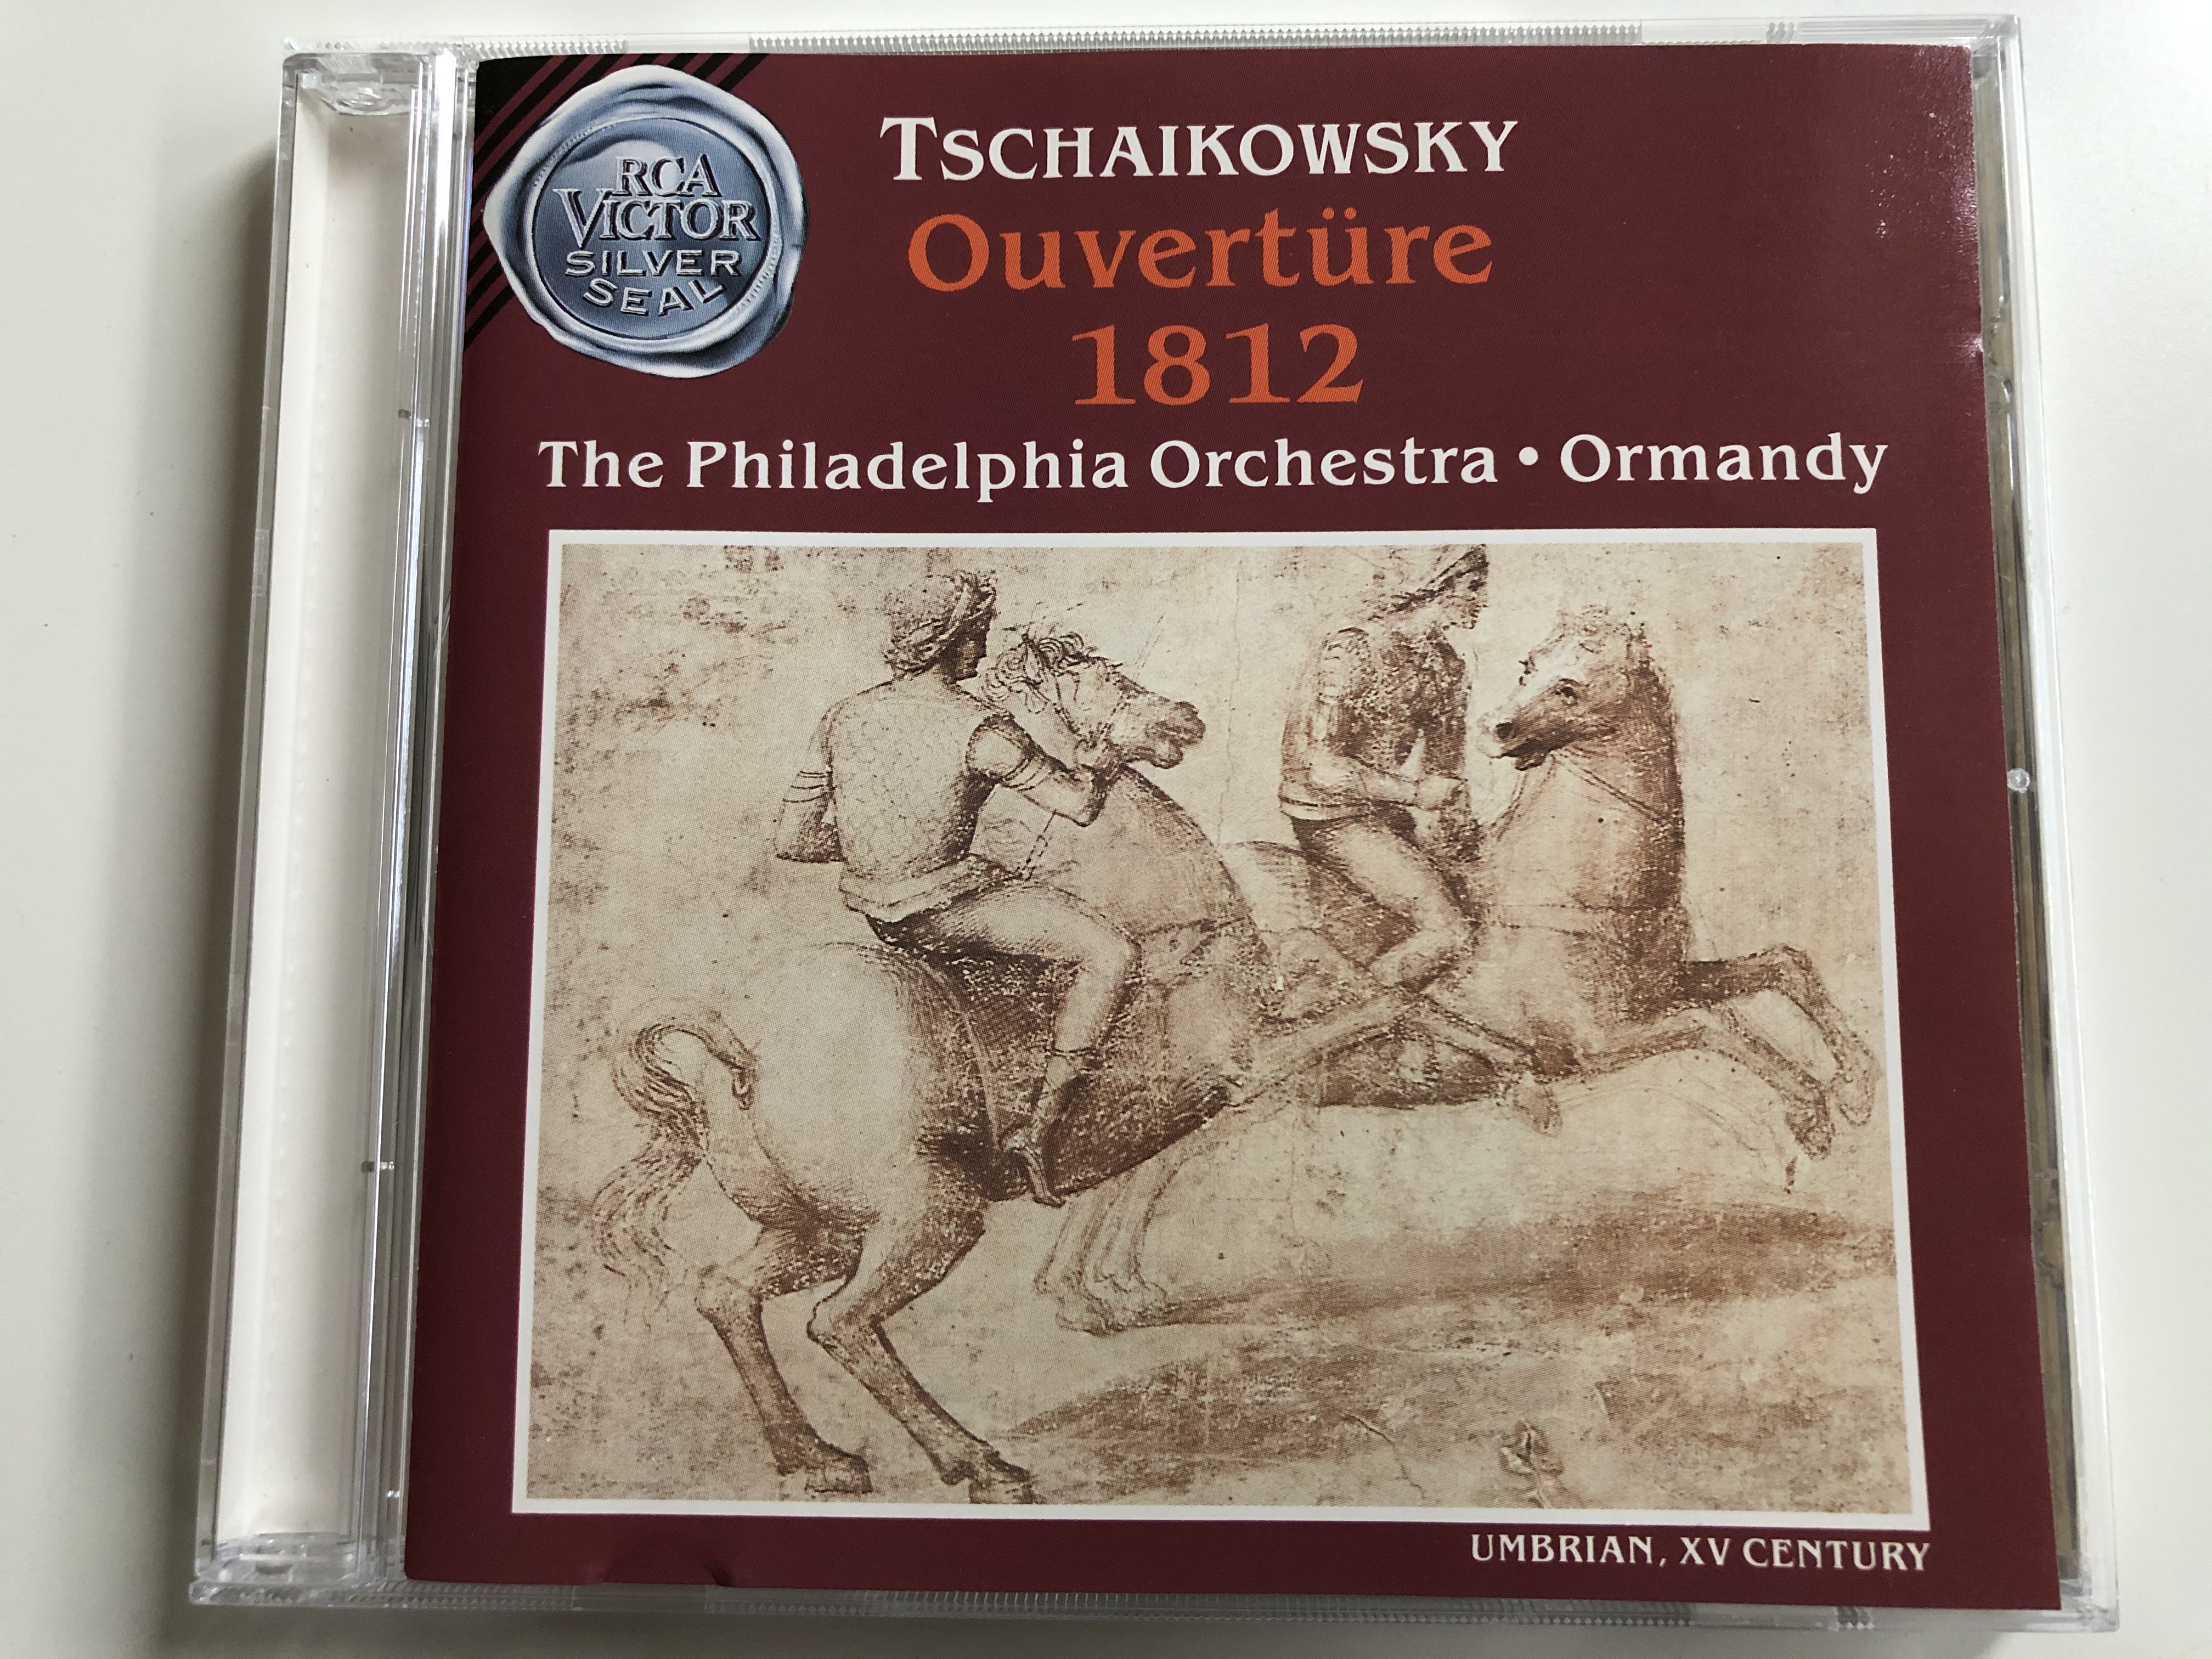 tcha-kovsky-overture-1812-the-philadelphia-orchestra-ormandy-rca-victor-silver-seal-audio-cd-1988-vd60618-1-.jpg